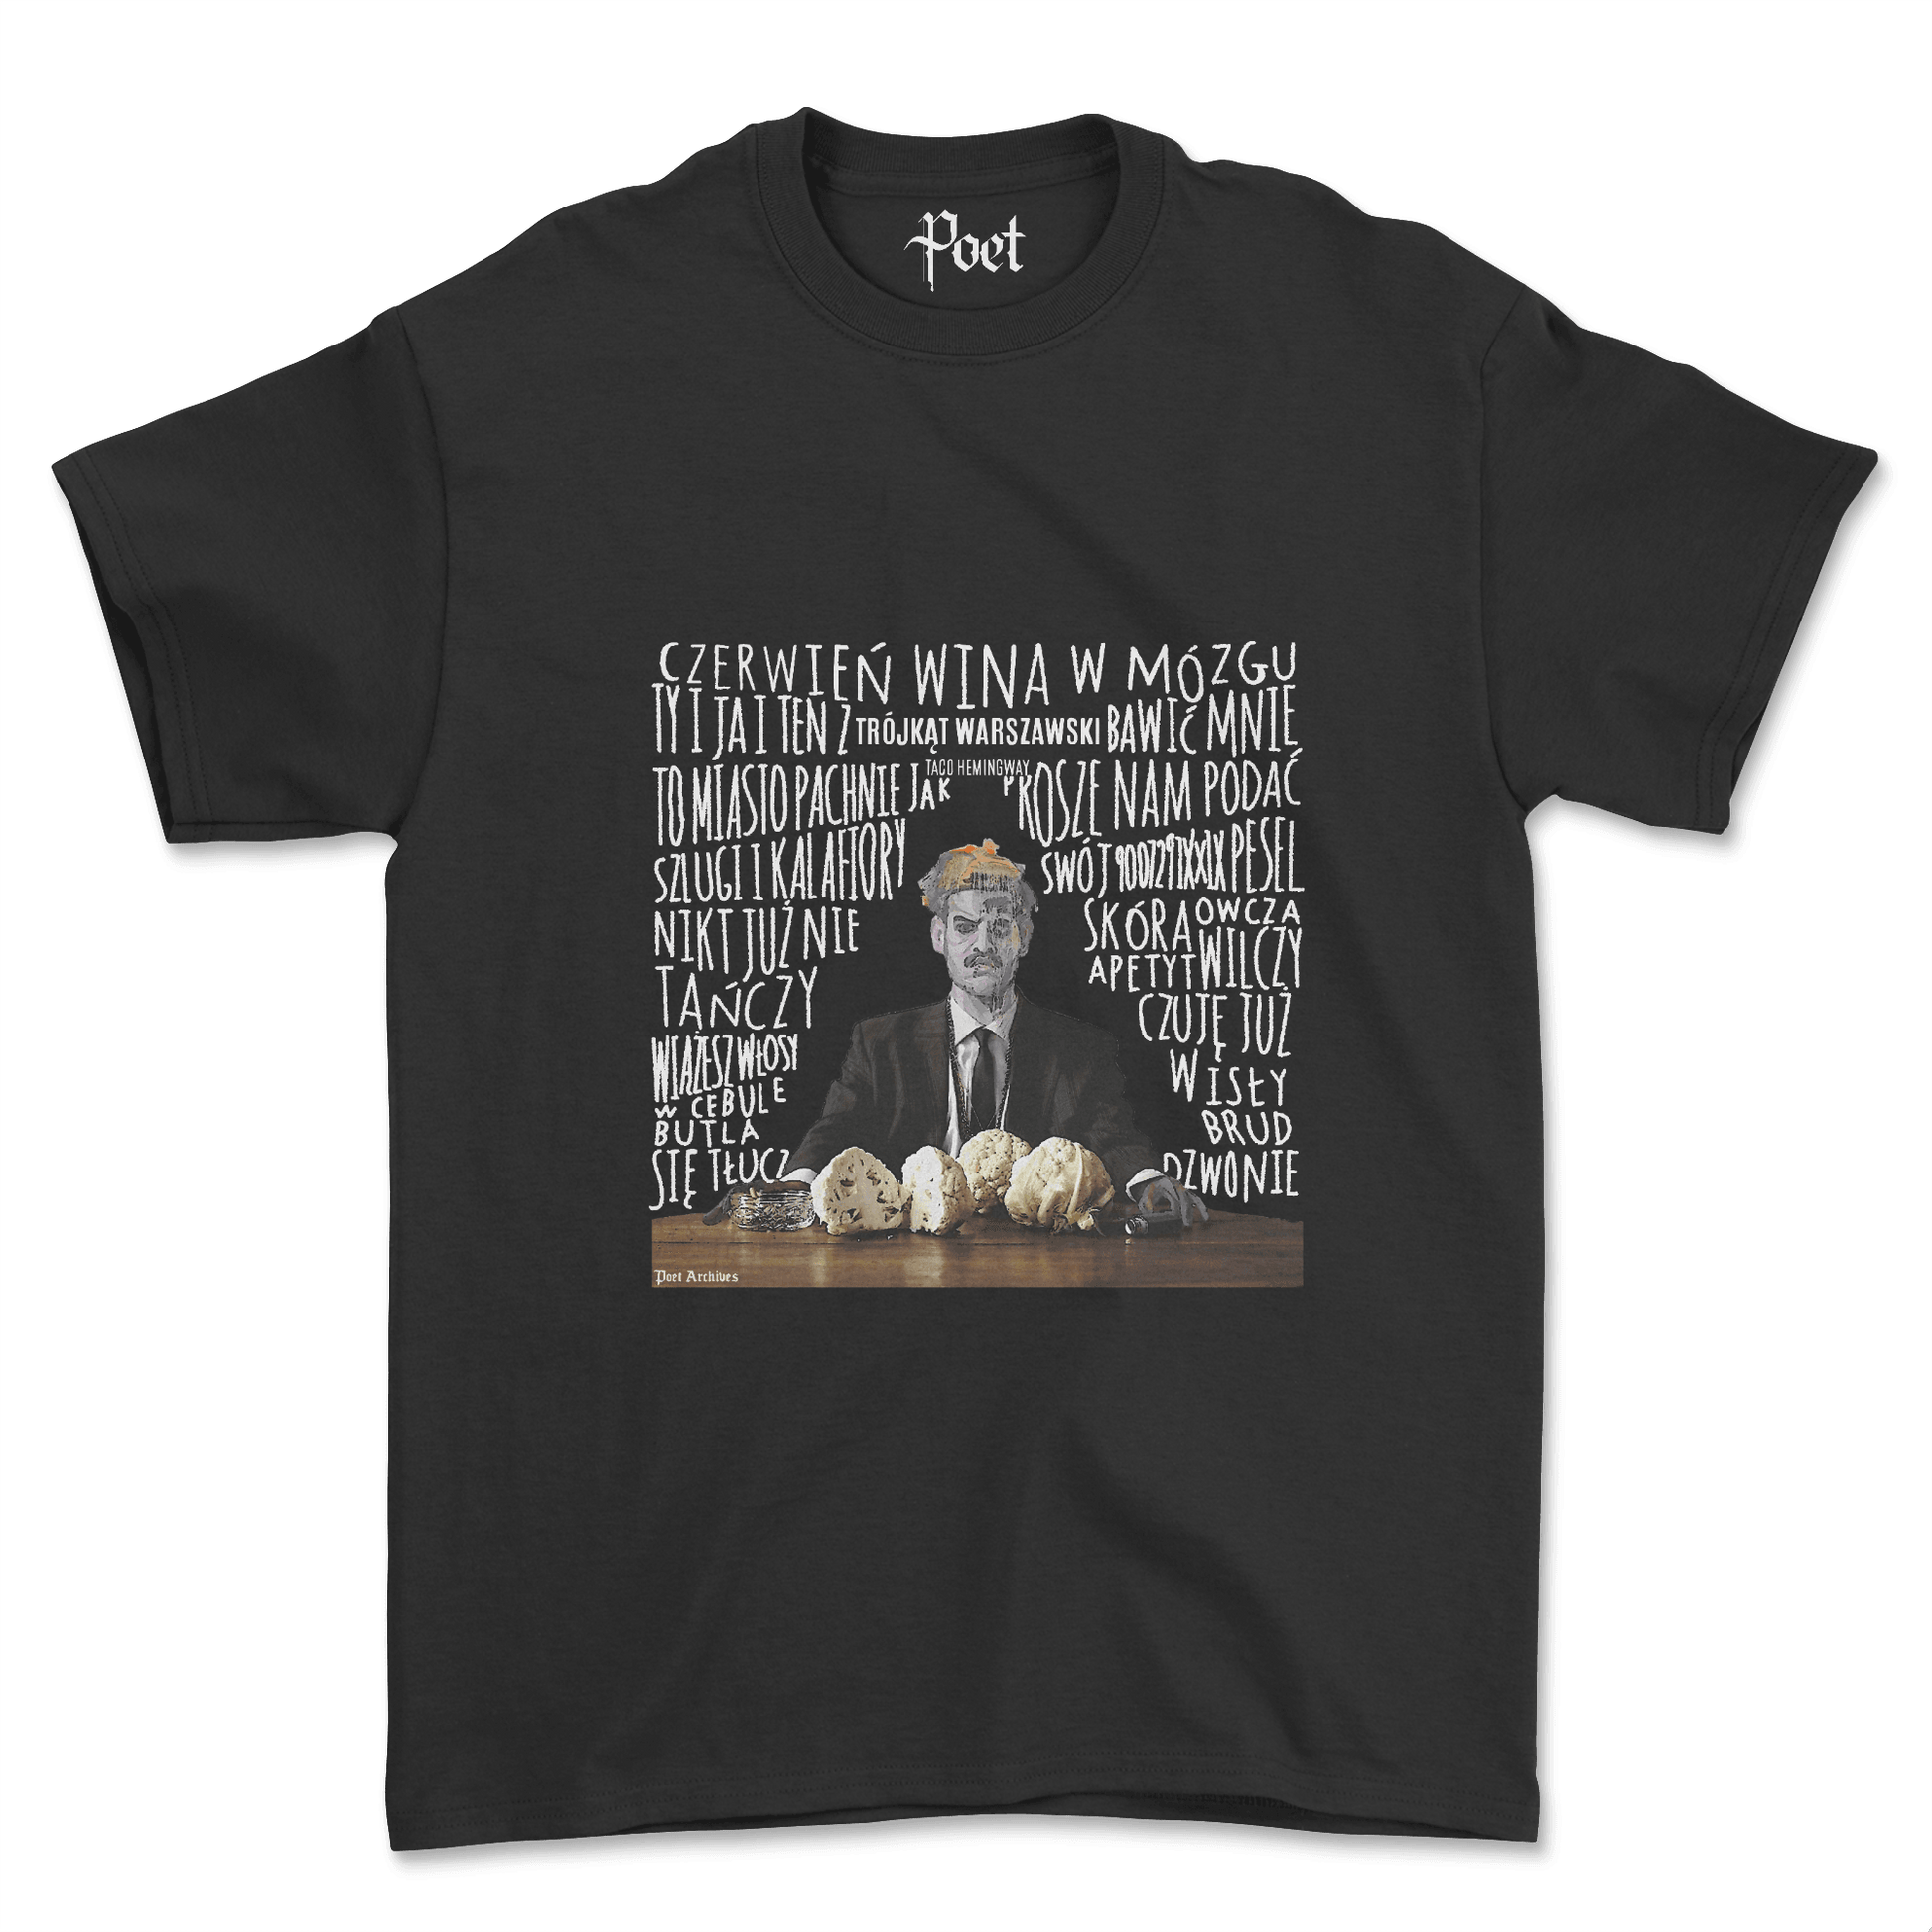 Taco Hemingway T-Shirt - Poet Archives